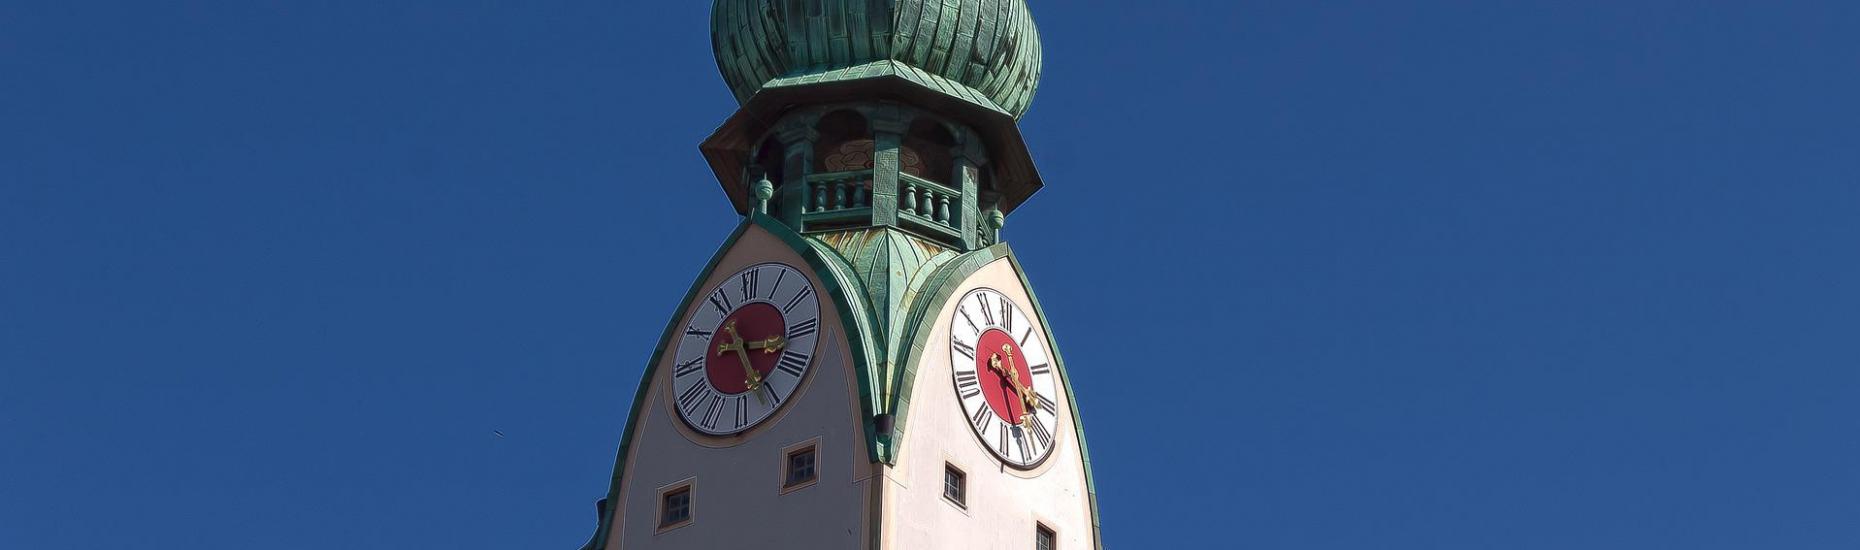 Kirchturm in Rosenheim, Deutschland